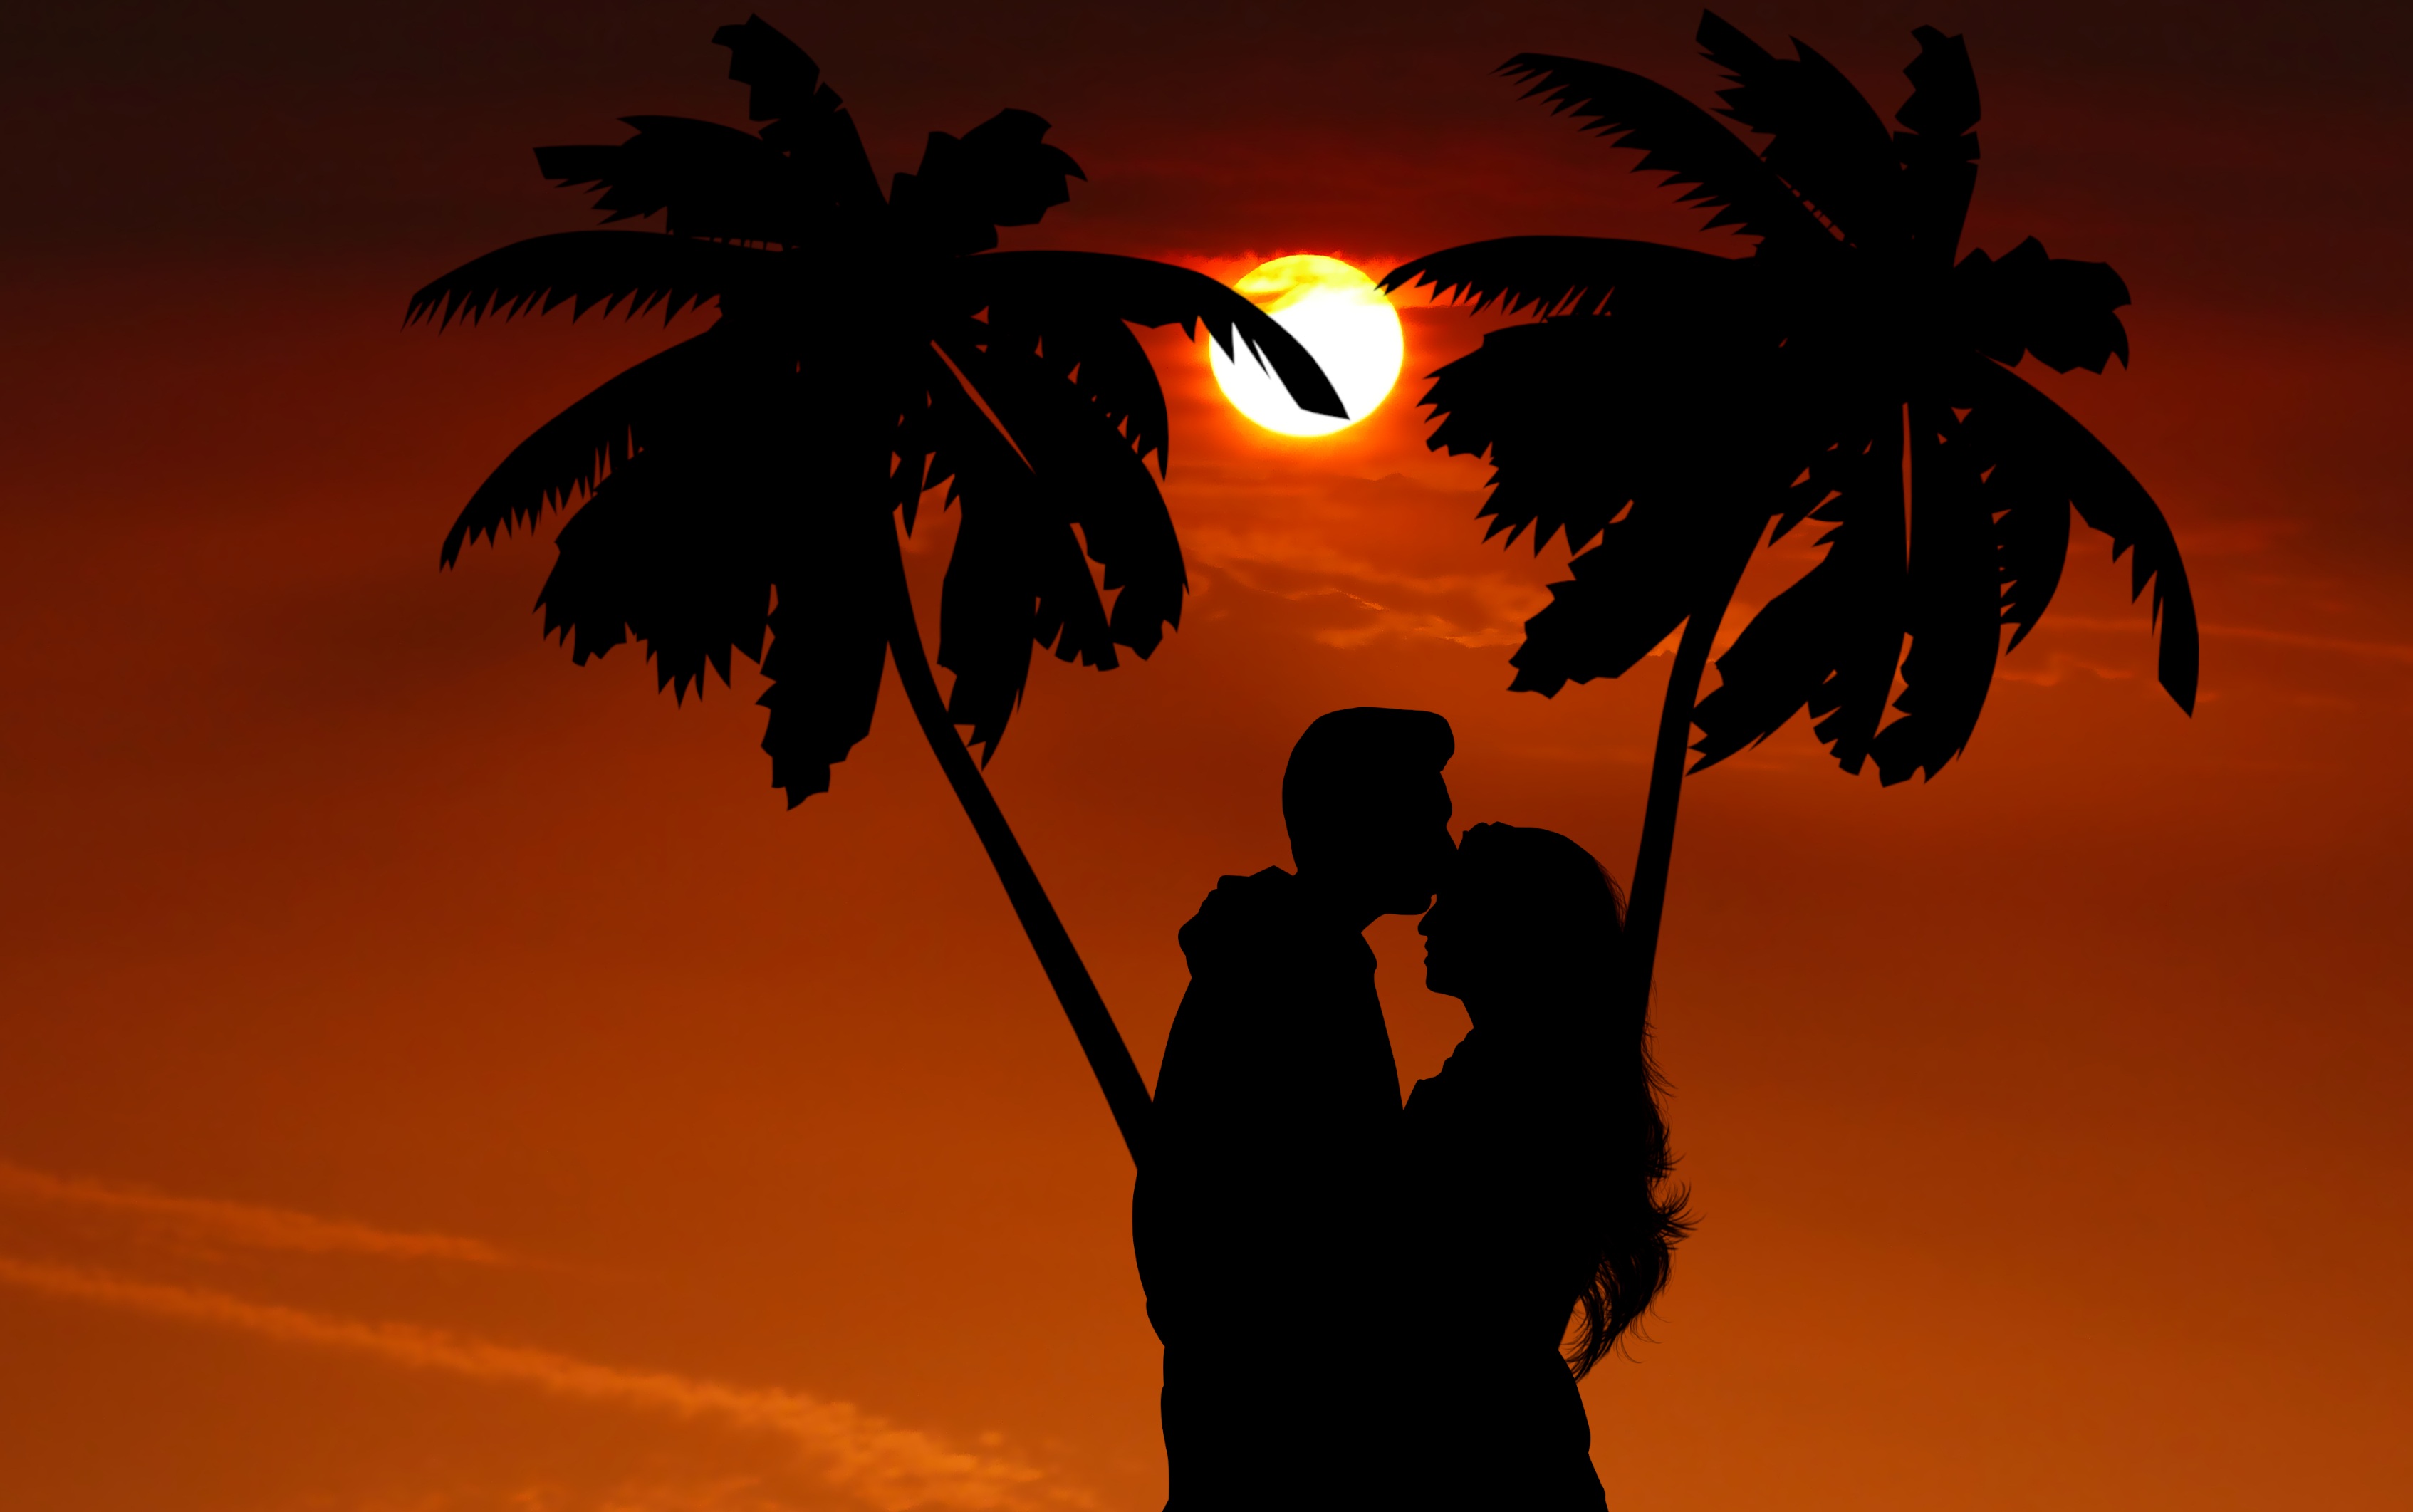 couple, love, romance, embrace, silhouettes, pair, night, palms